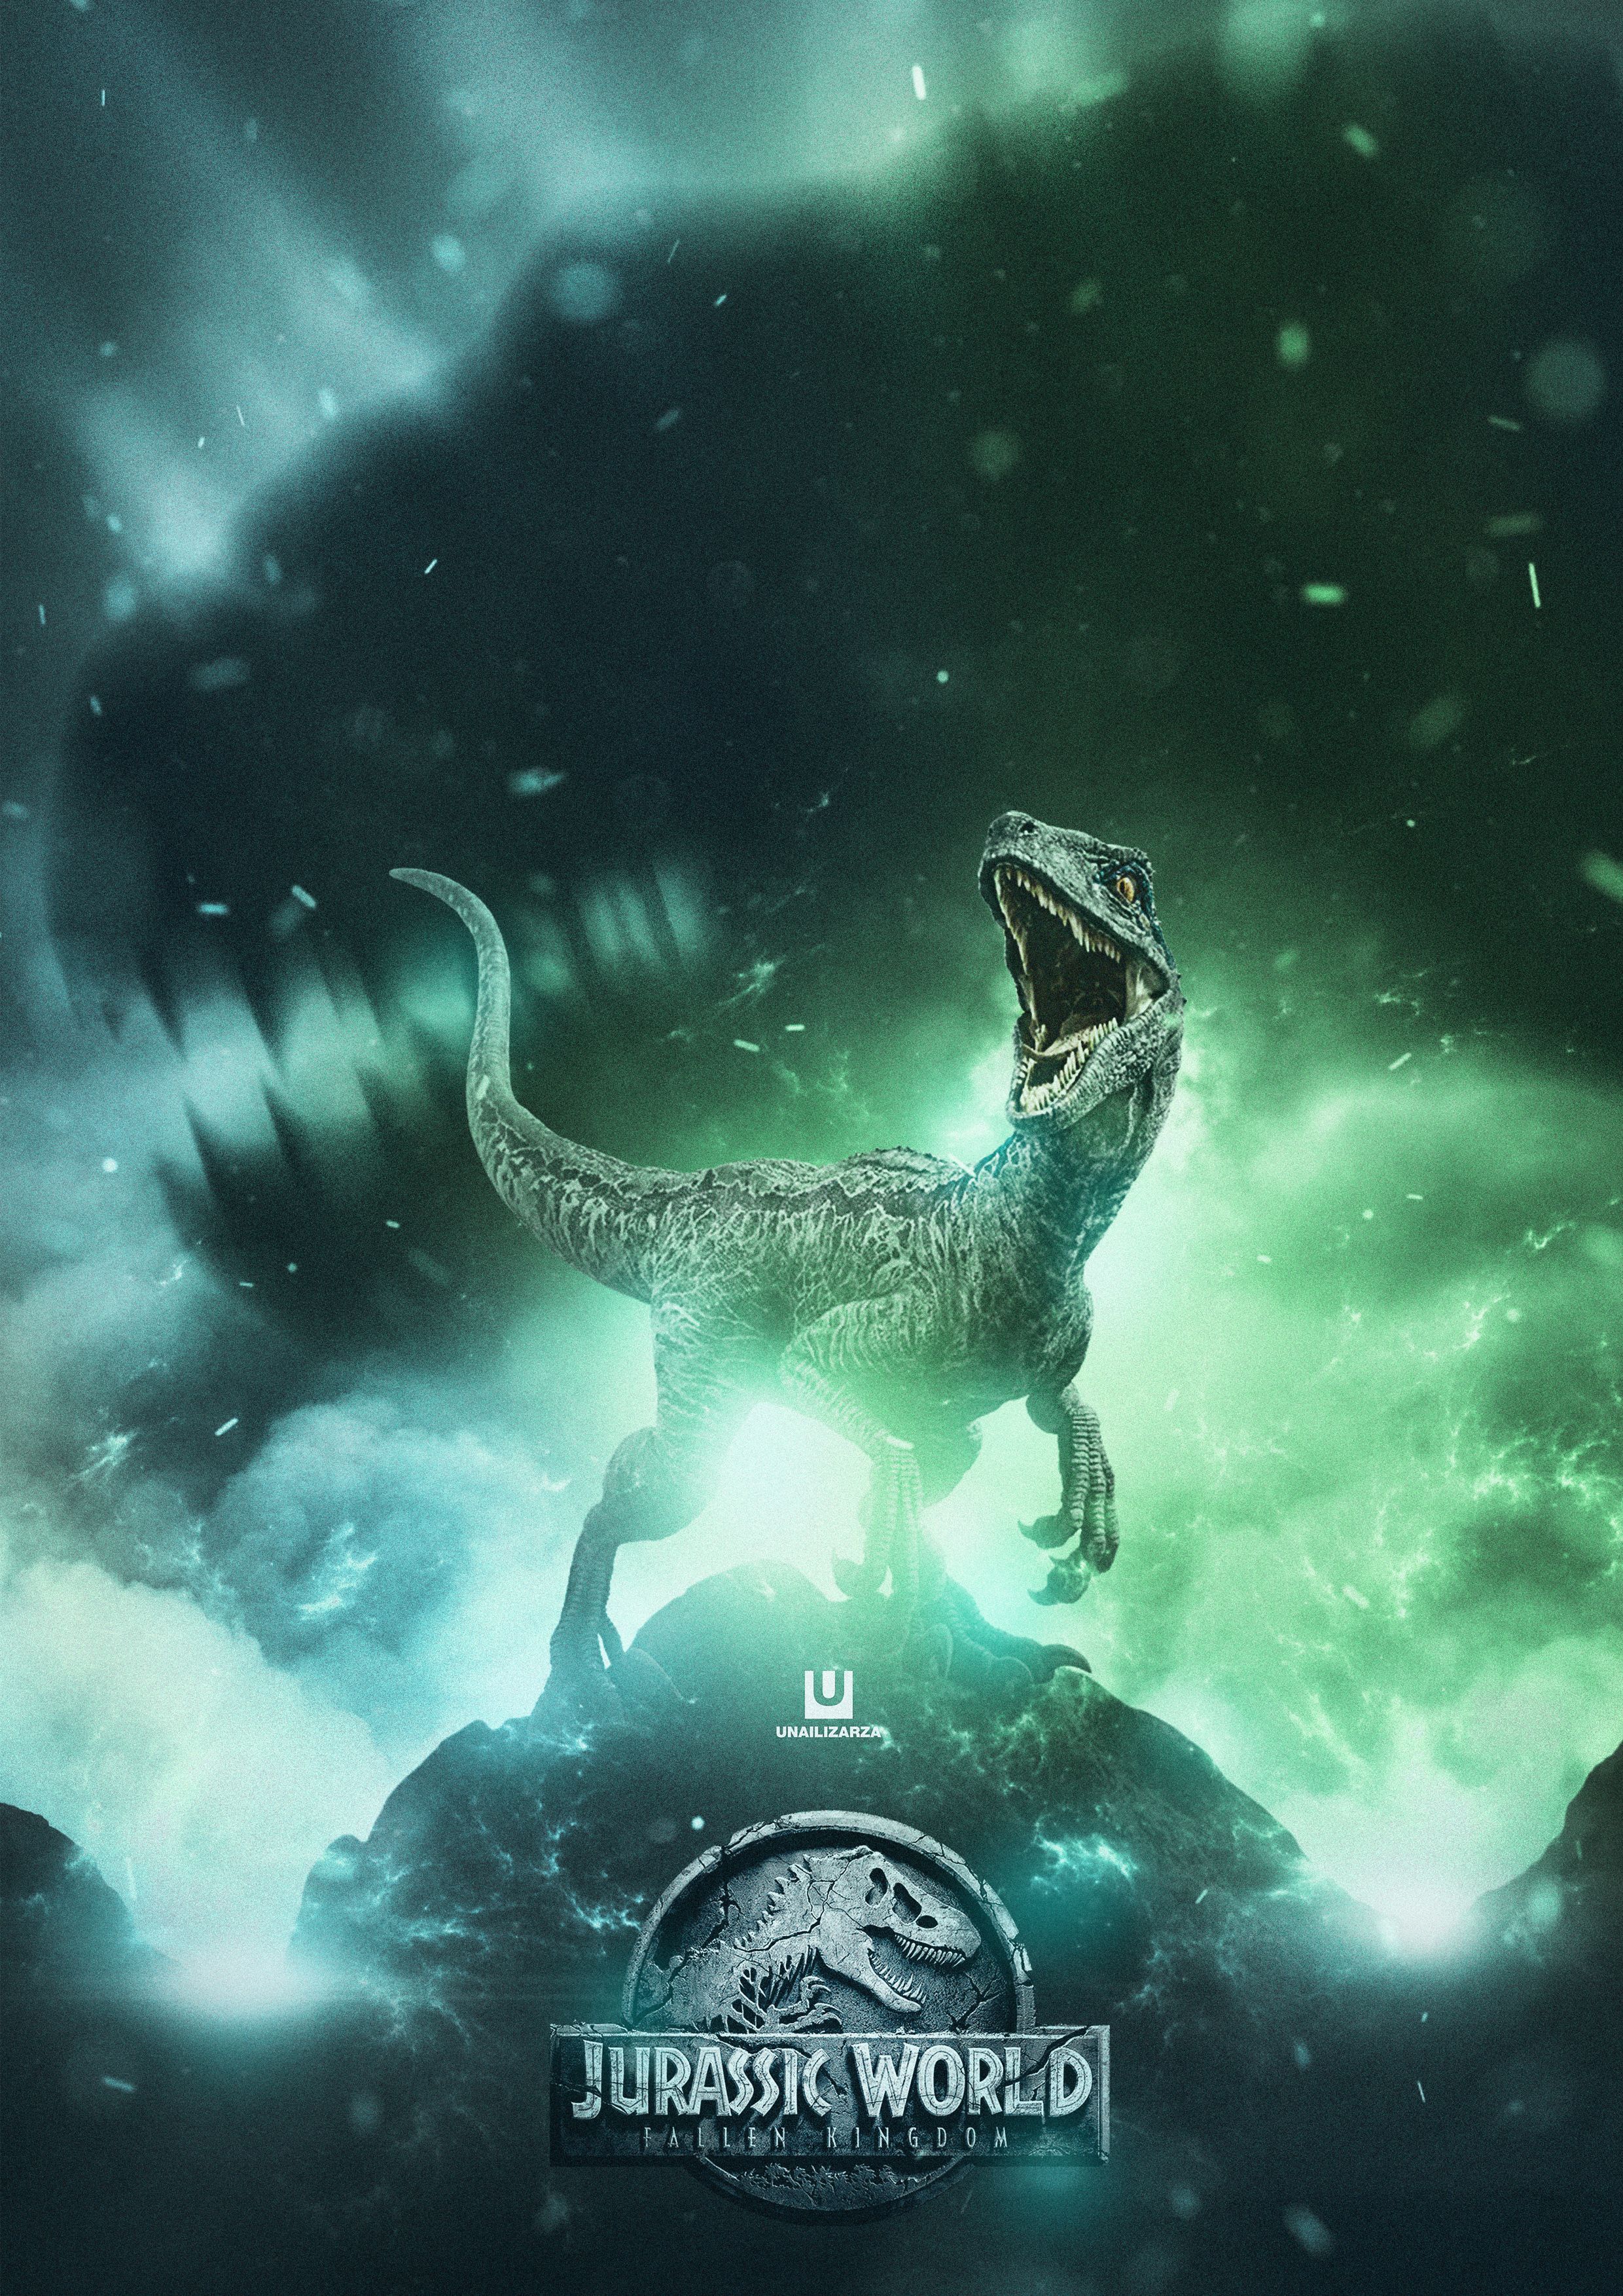 JURASSIC WORLD: BLUE Poster created by Unai Lizarza. Blue jurassic world, Jurassic world poster, Jurassic world wallpaper